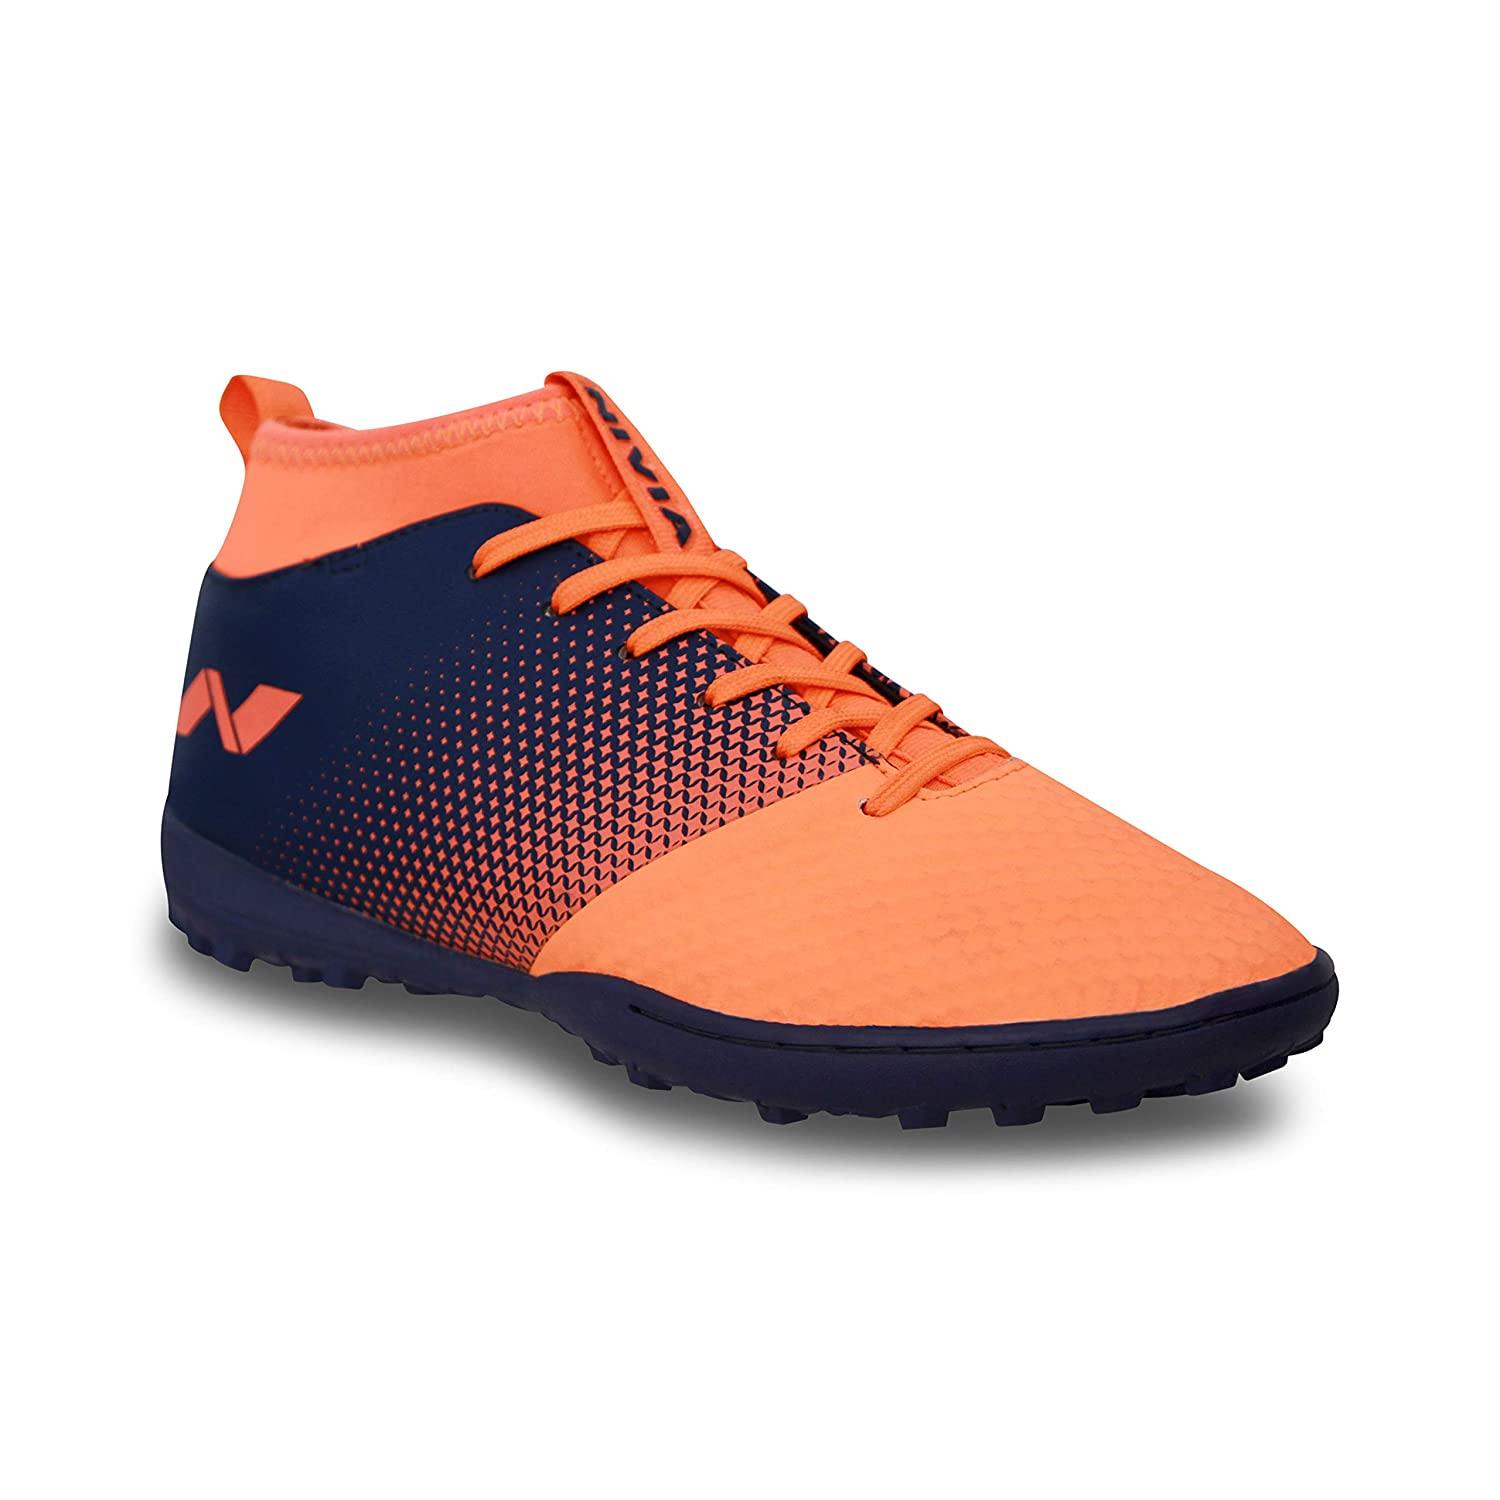 Nivia Ashtang Football Turf Shoes - Fluorescent Orange/Black - Best Price online Prokicksports.com